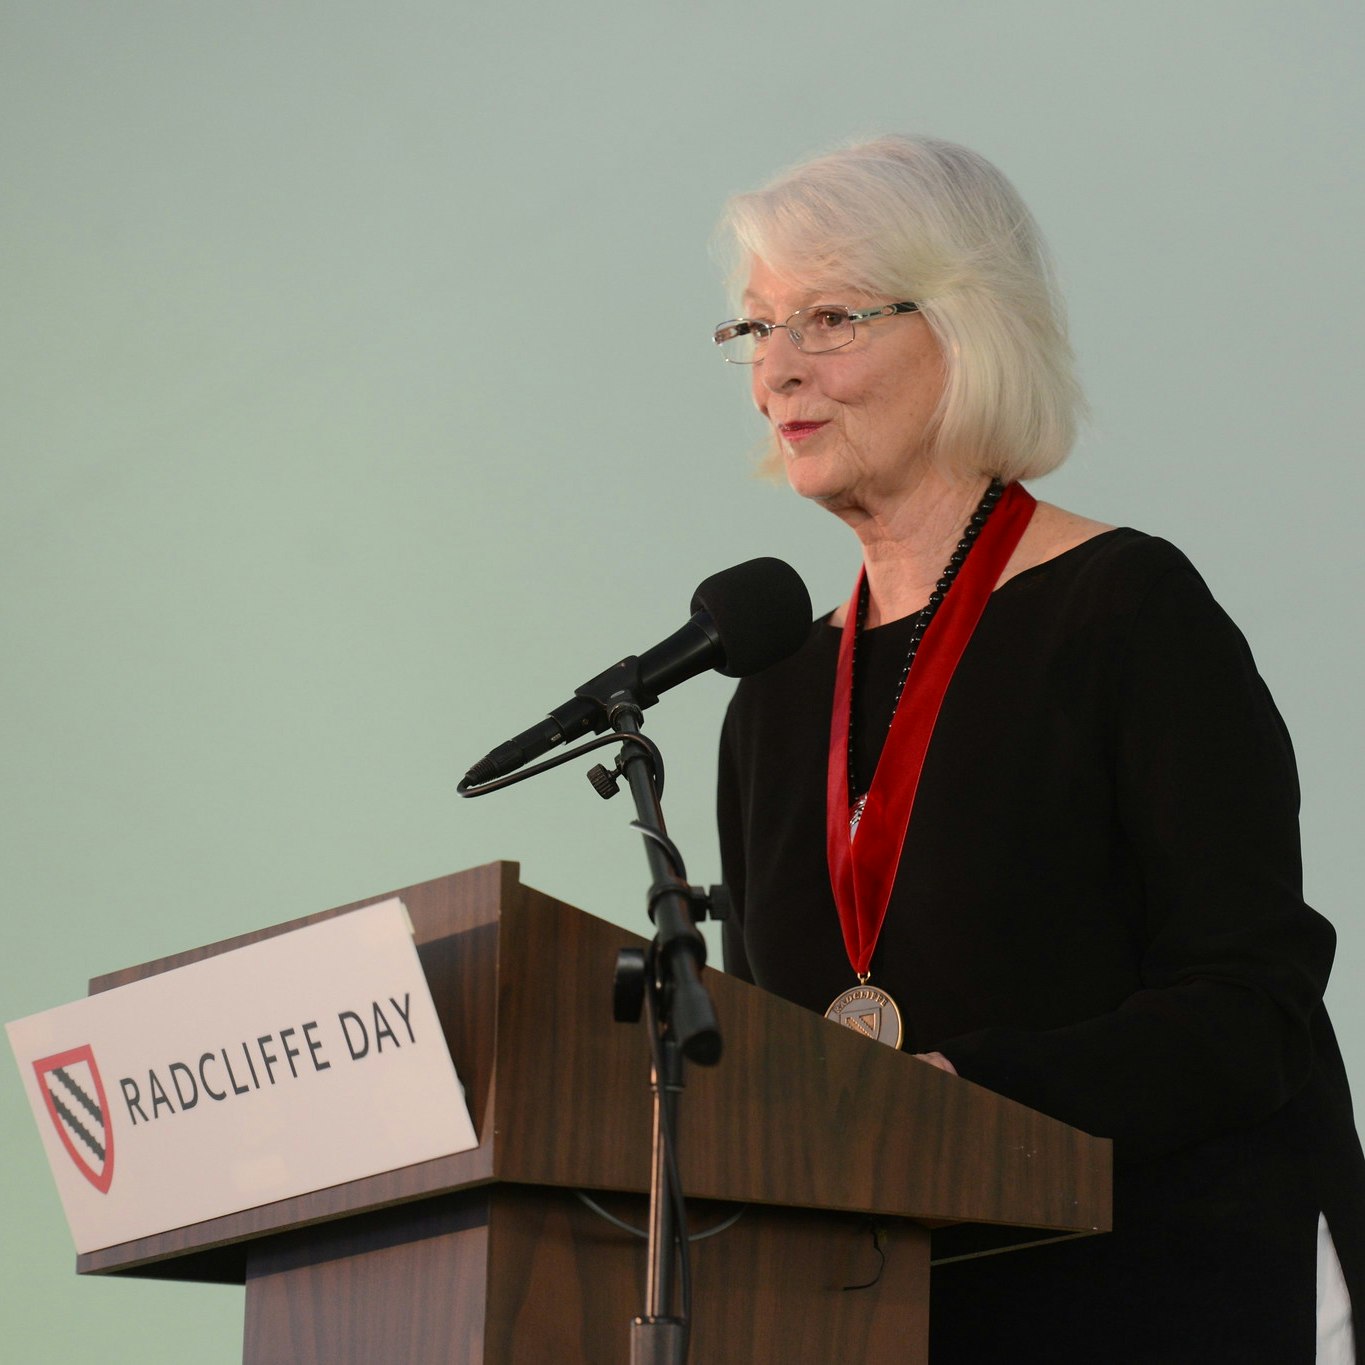 Speech by Jane Alexander at Radcliffe Day 2013